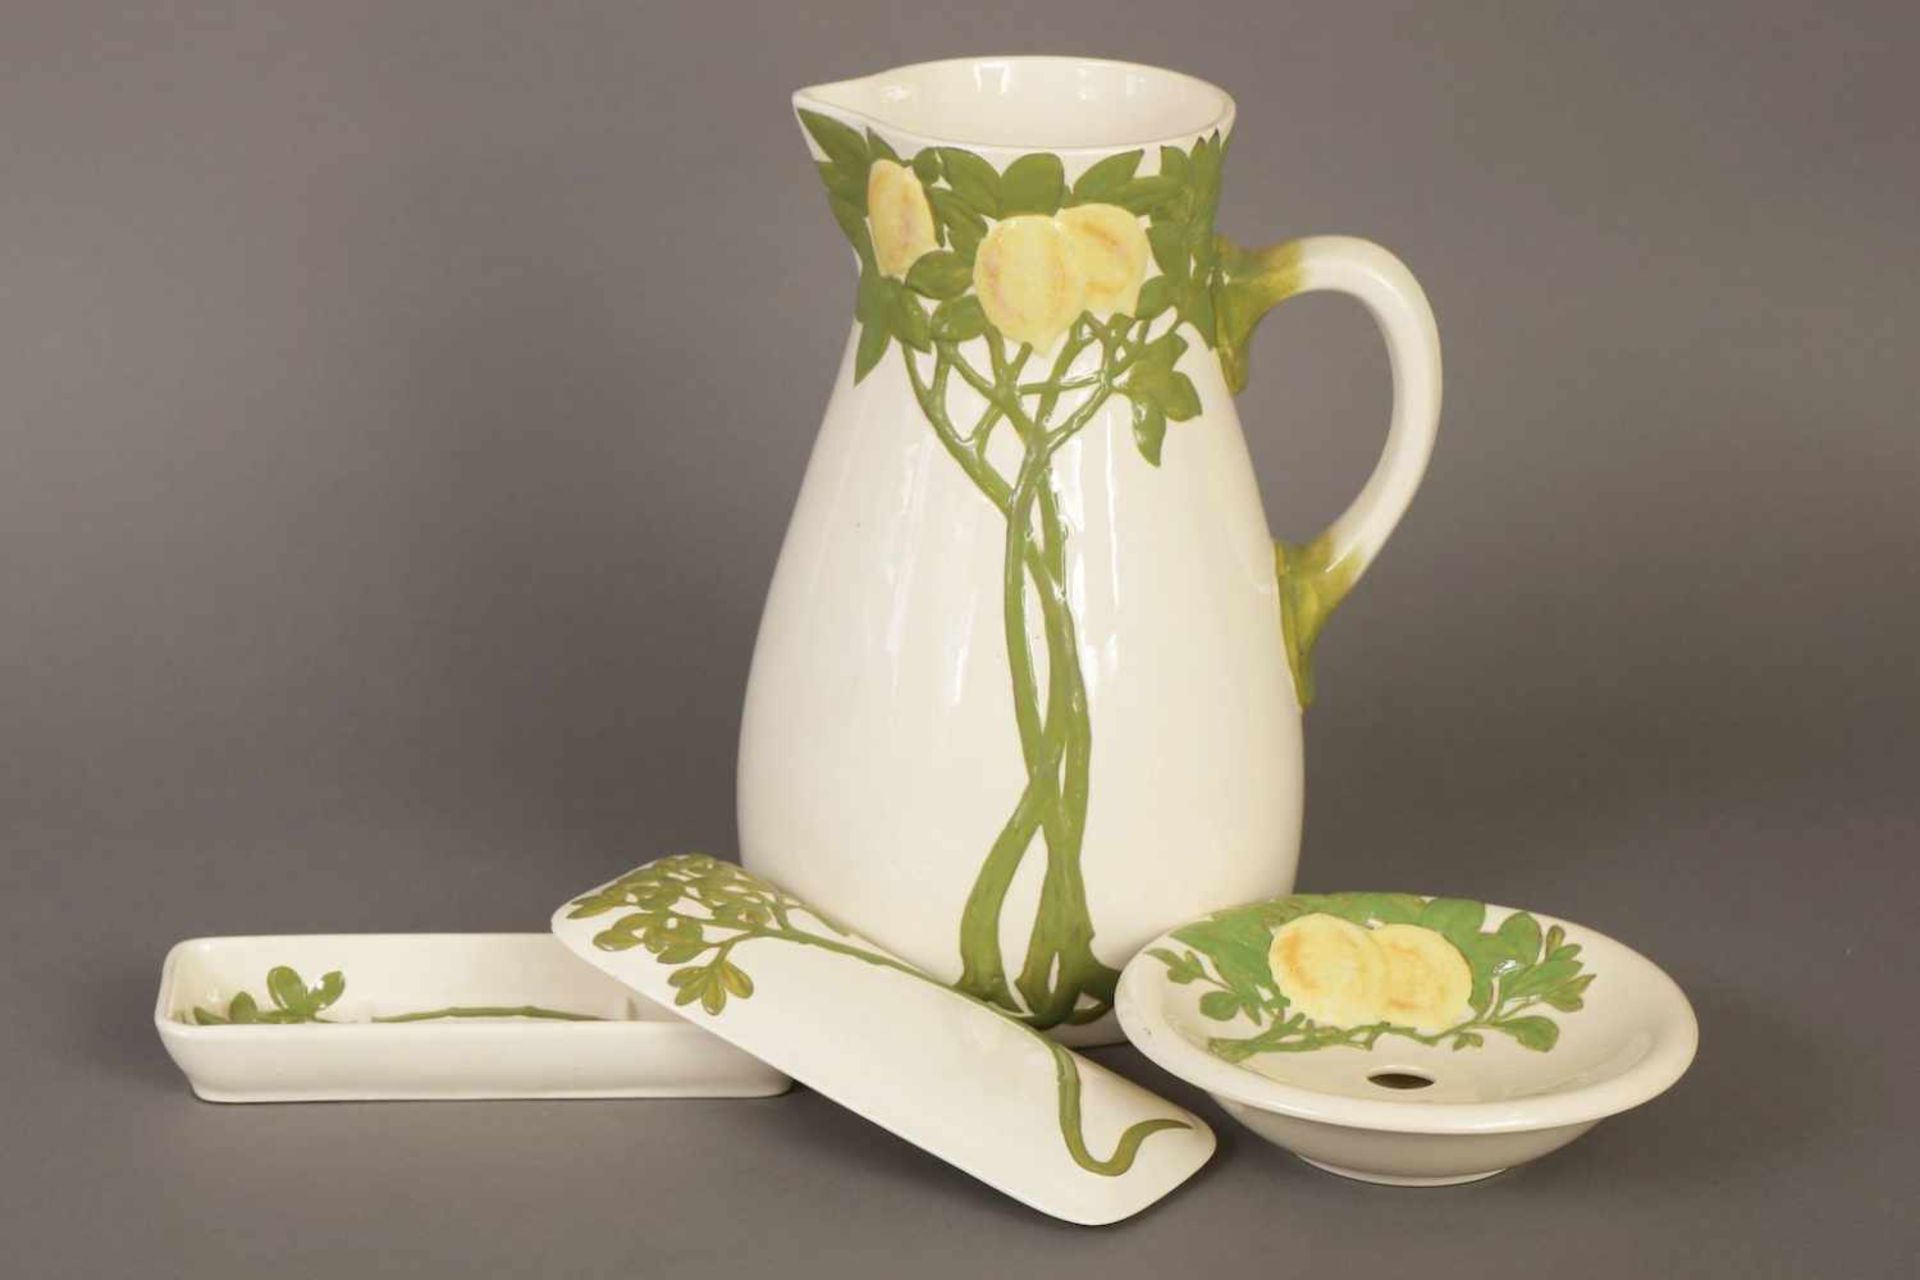 Waschset Saargemünd, um 1900, Keramik, Jugendstil Reliefdekor ¨Zitronen¨ (gelb-grün staffiert),